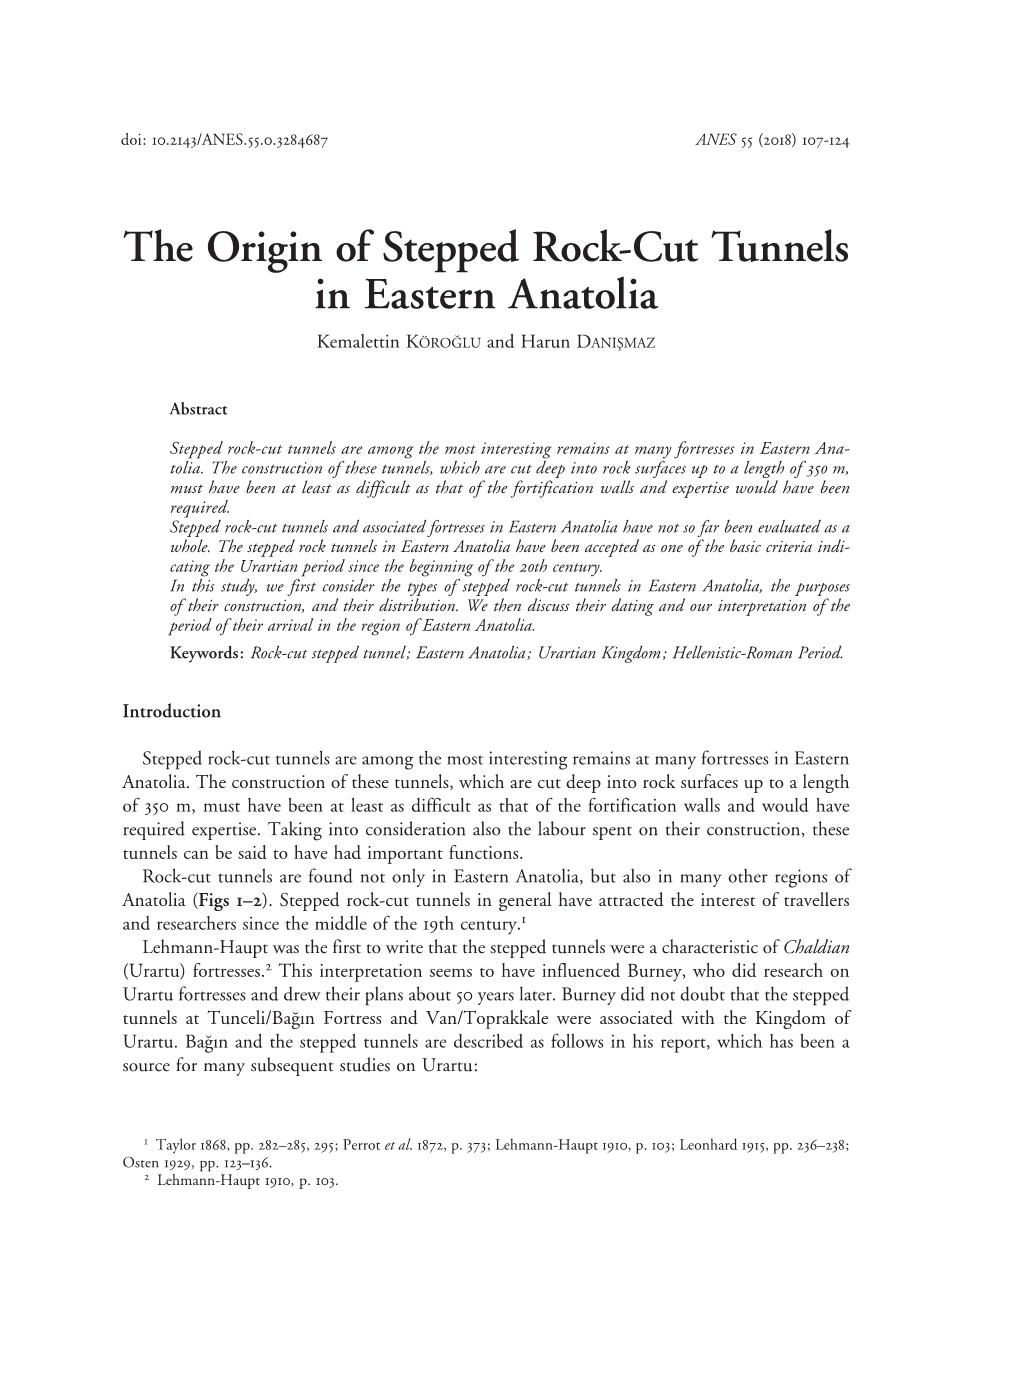 The Origin of Stepped Rock-Cut Tunnels in Eastern Anatolia Kemalettin KÖROĞLU and Harun DANIŞMAZ